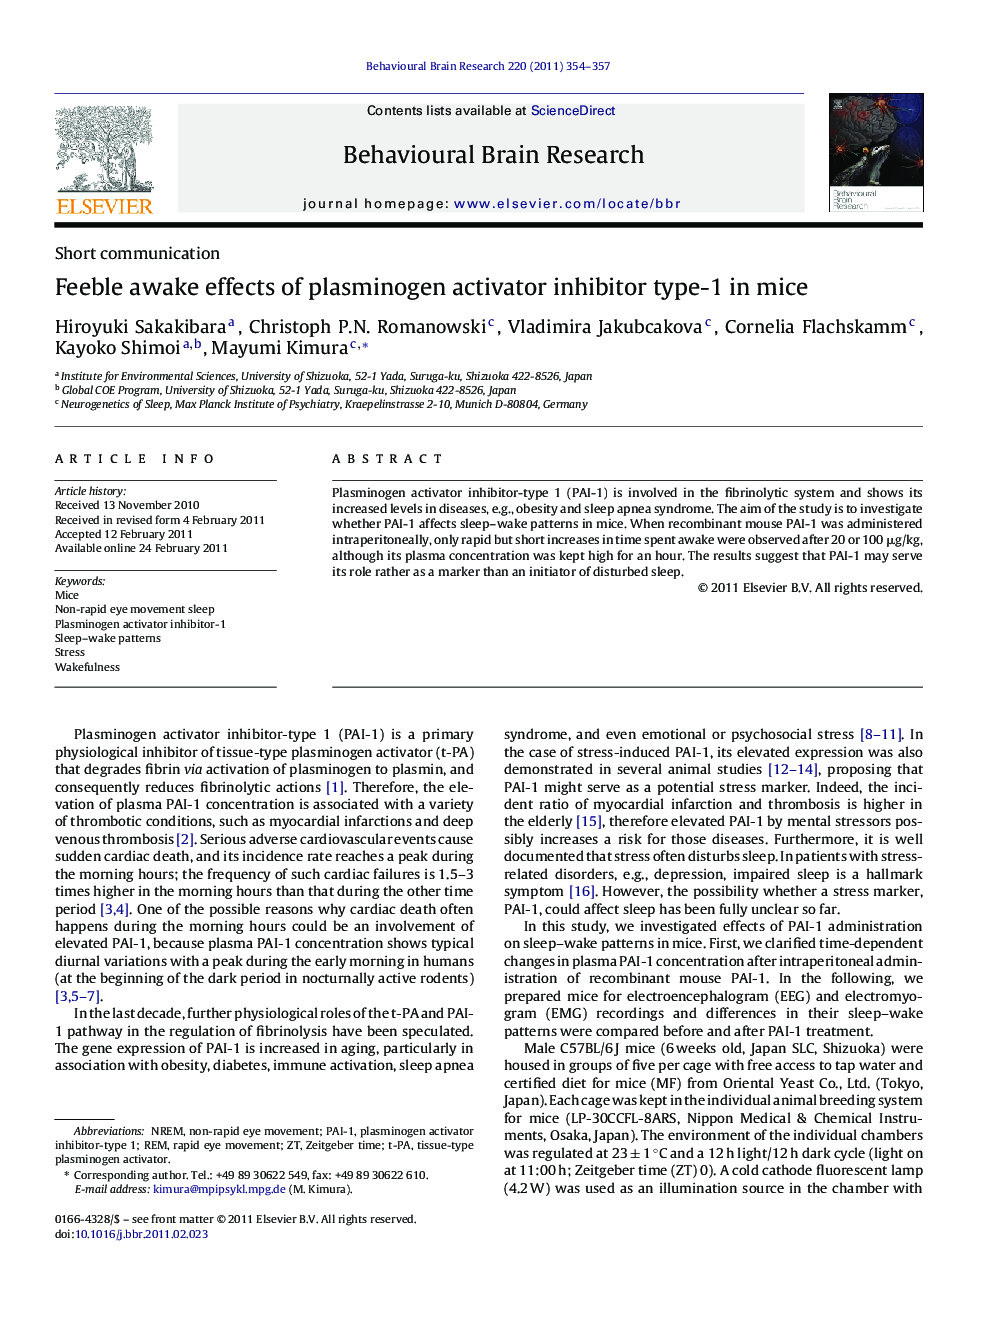 Feeble awake effects of plasminogen activator inhibitor type-1 in mice